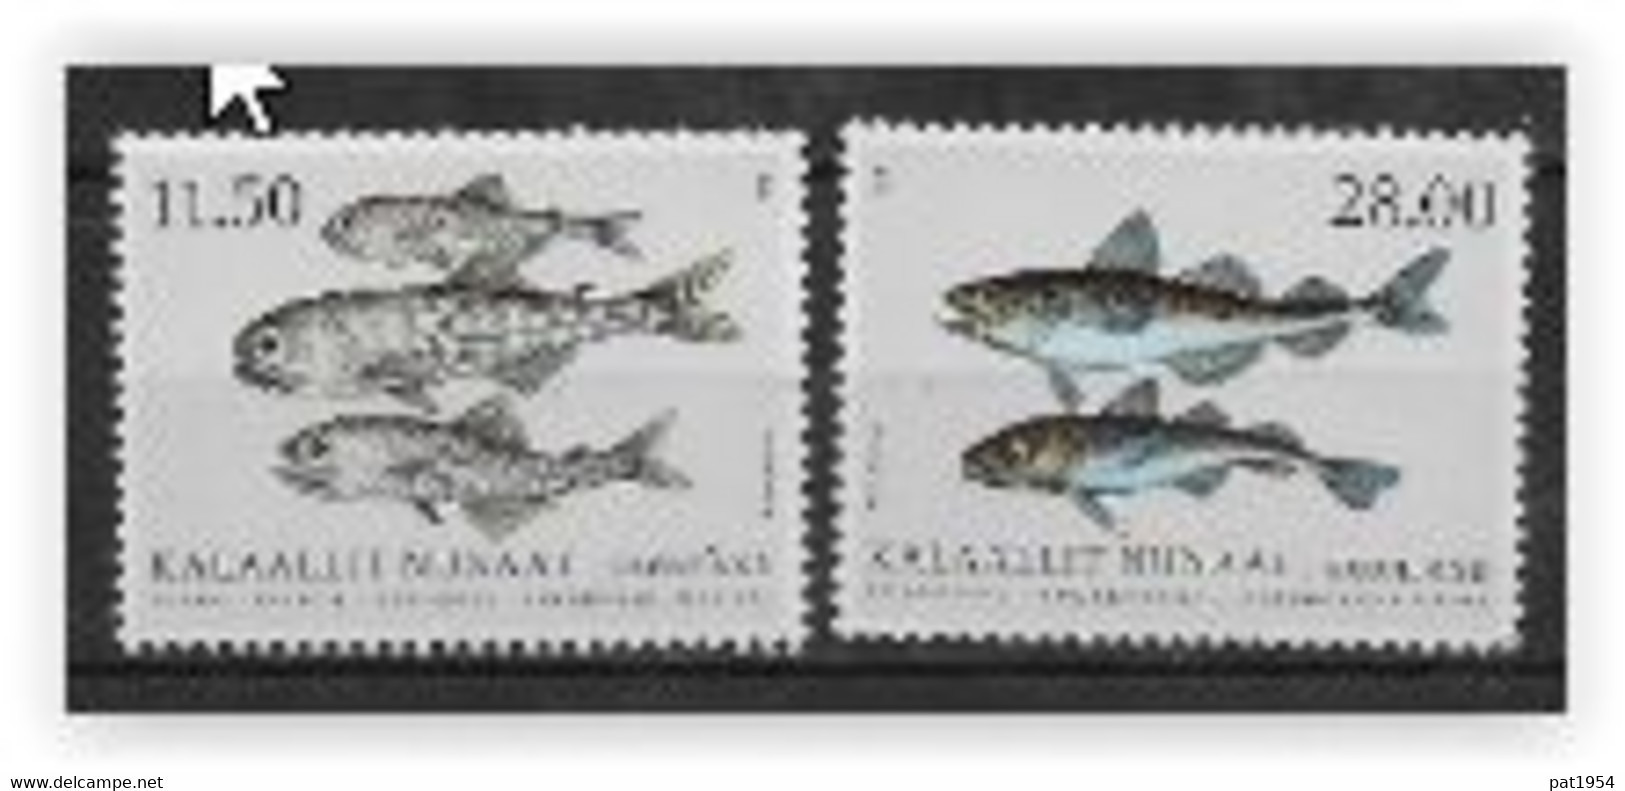 Groënland 2022, Série Neuve, Poissons - Unused Stamps